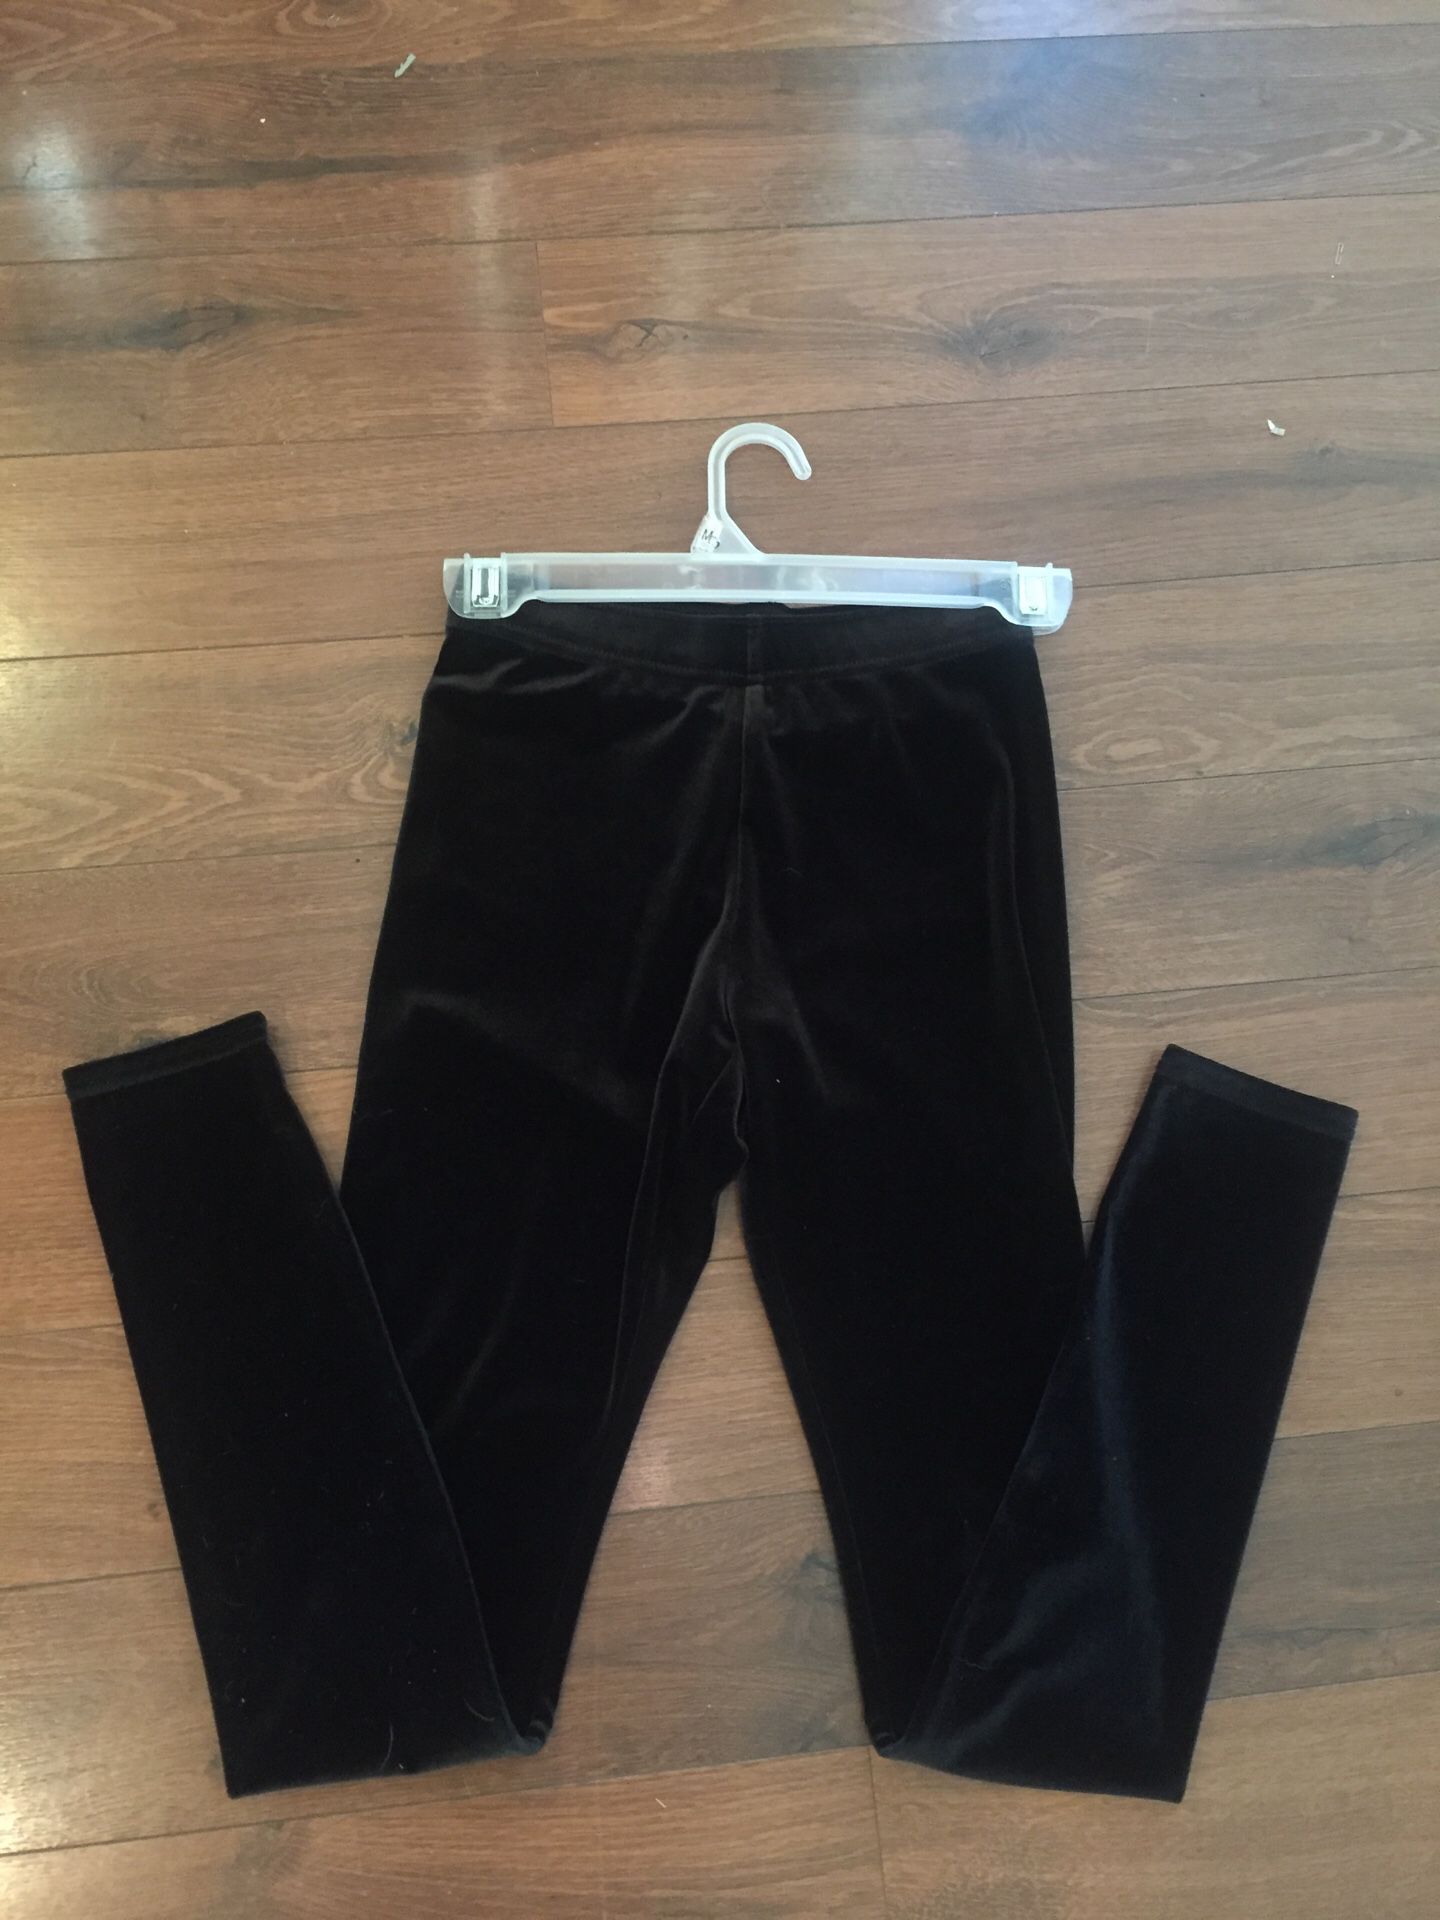 NEW Abercrombie Kids black stretch velvet leggings - size medium - perfect for the Christmas holidays or dressy.